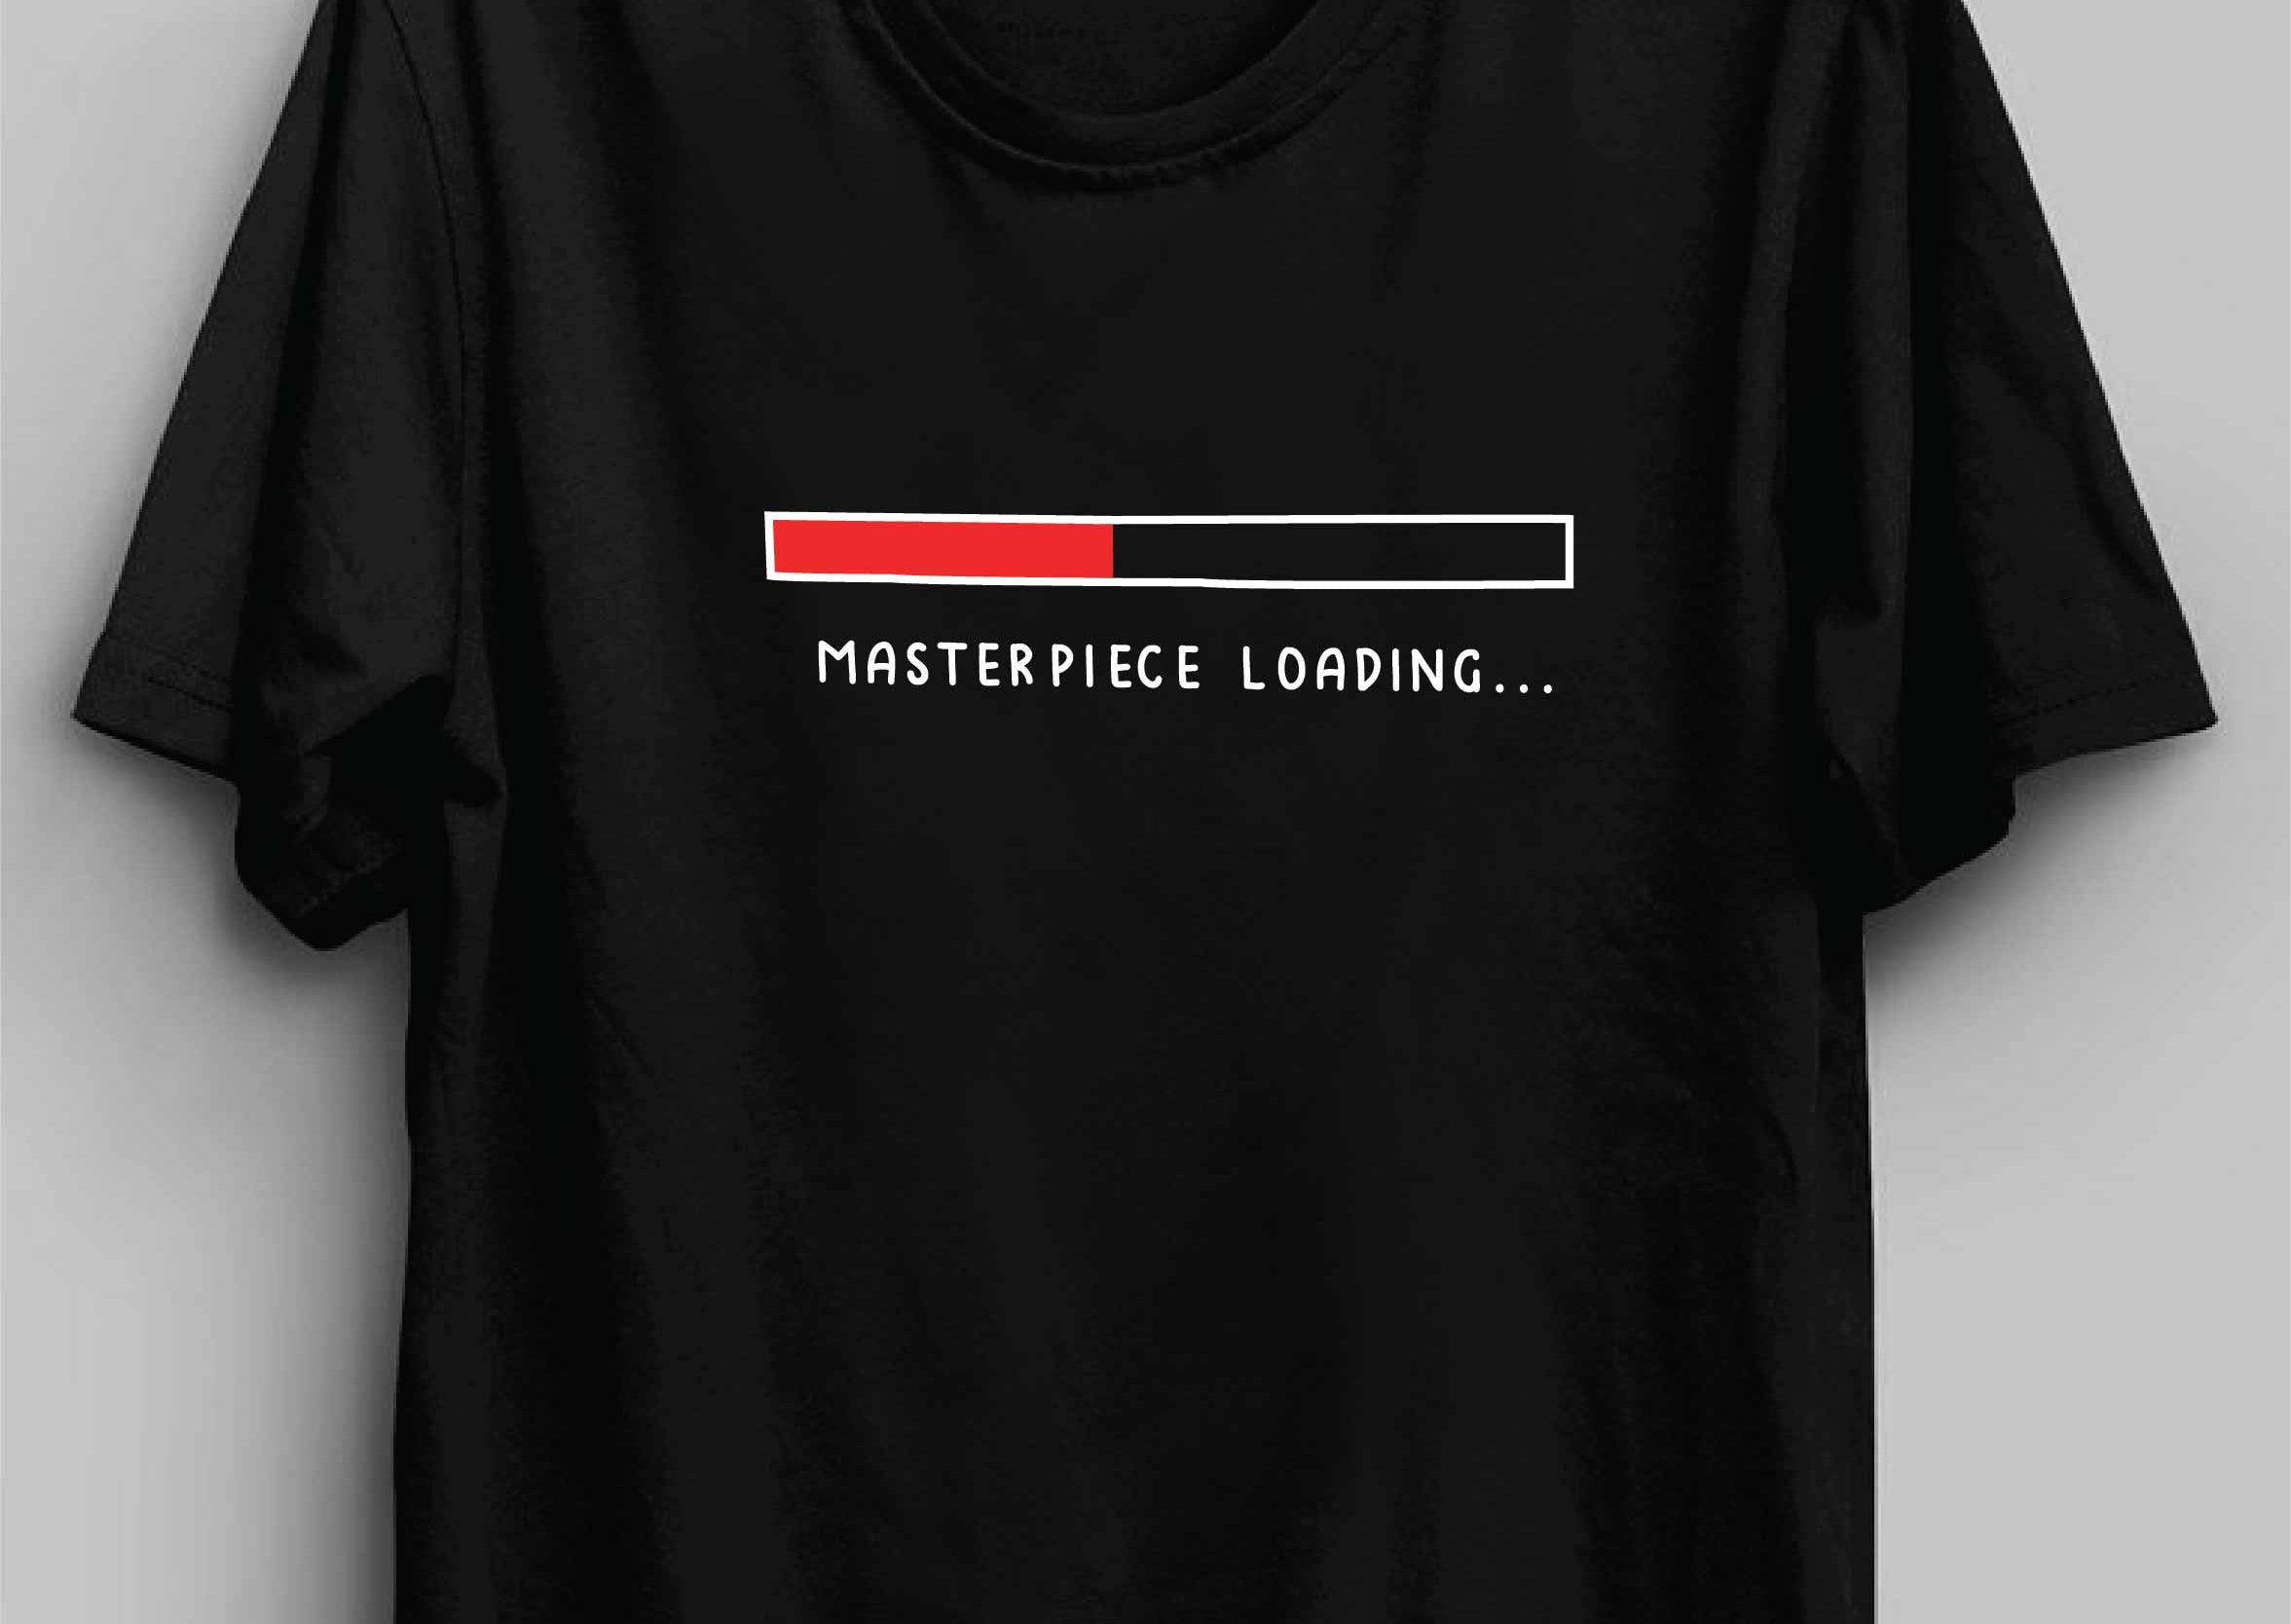 Masterpiece Loading Reactr Tshirts For Men - Eyewearlabs